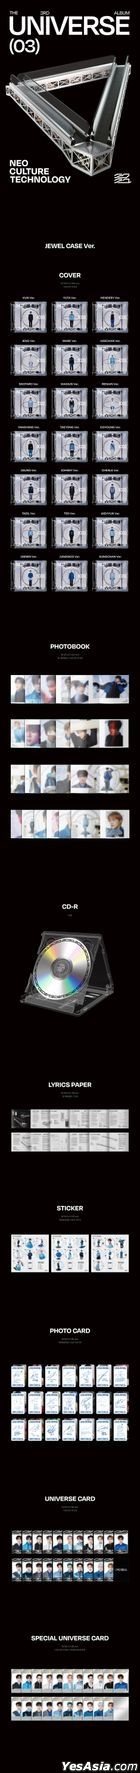 NCT Vol. 3 - Universe (Jewel Case Version) (Ji Sung Version) + Poster in Tube